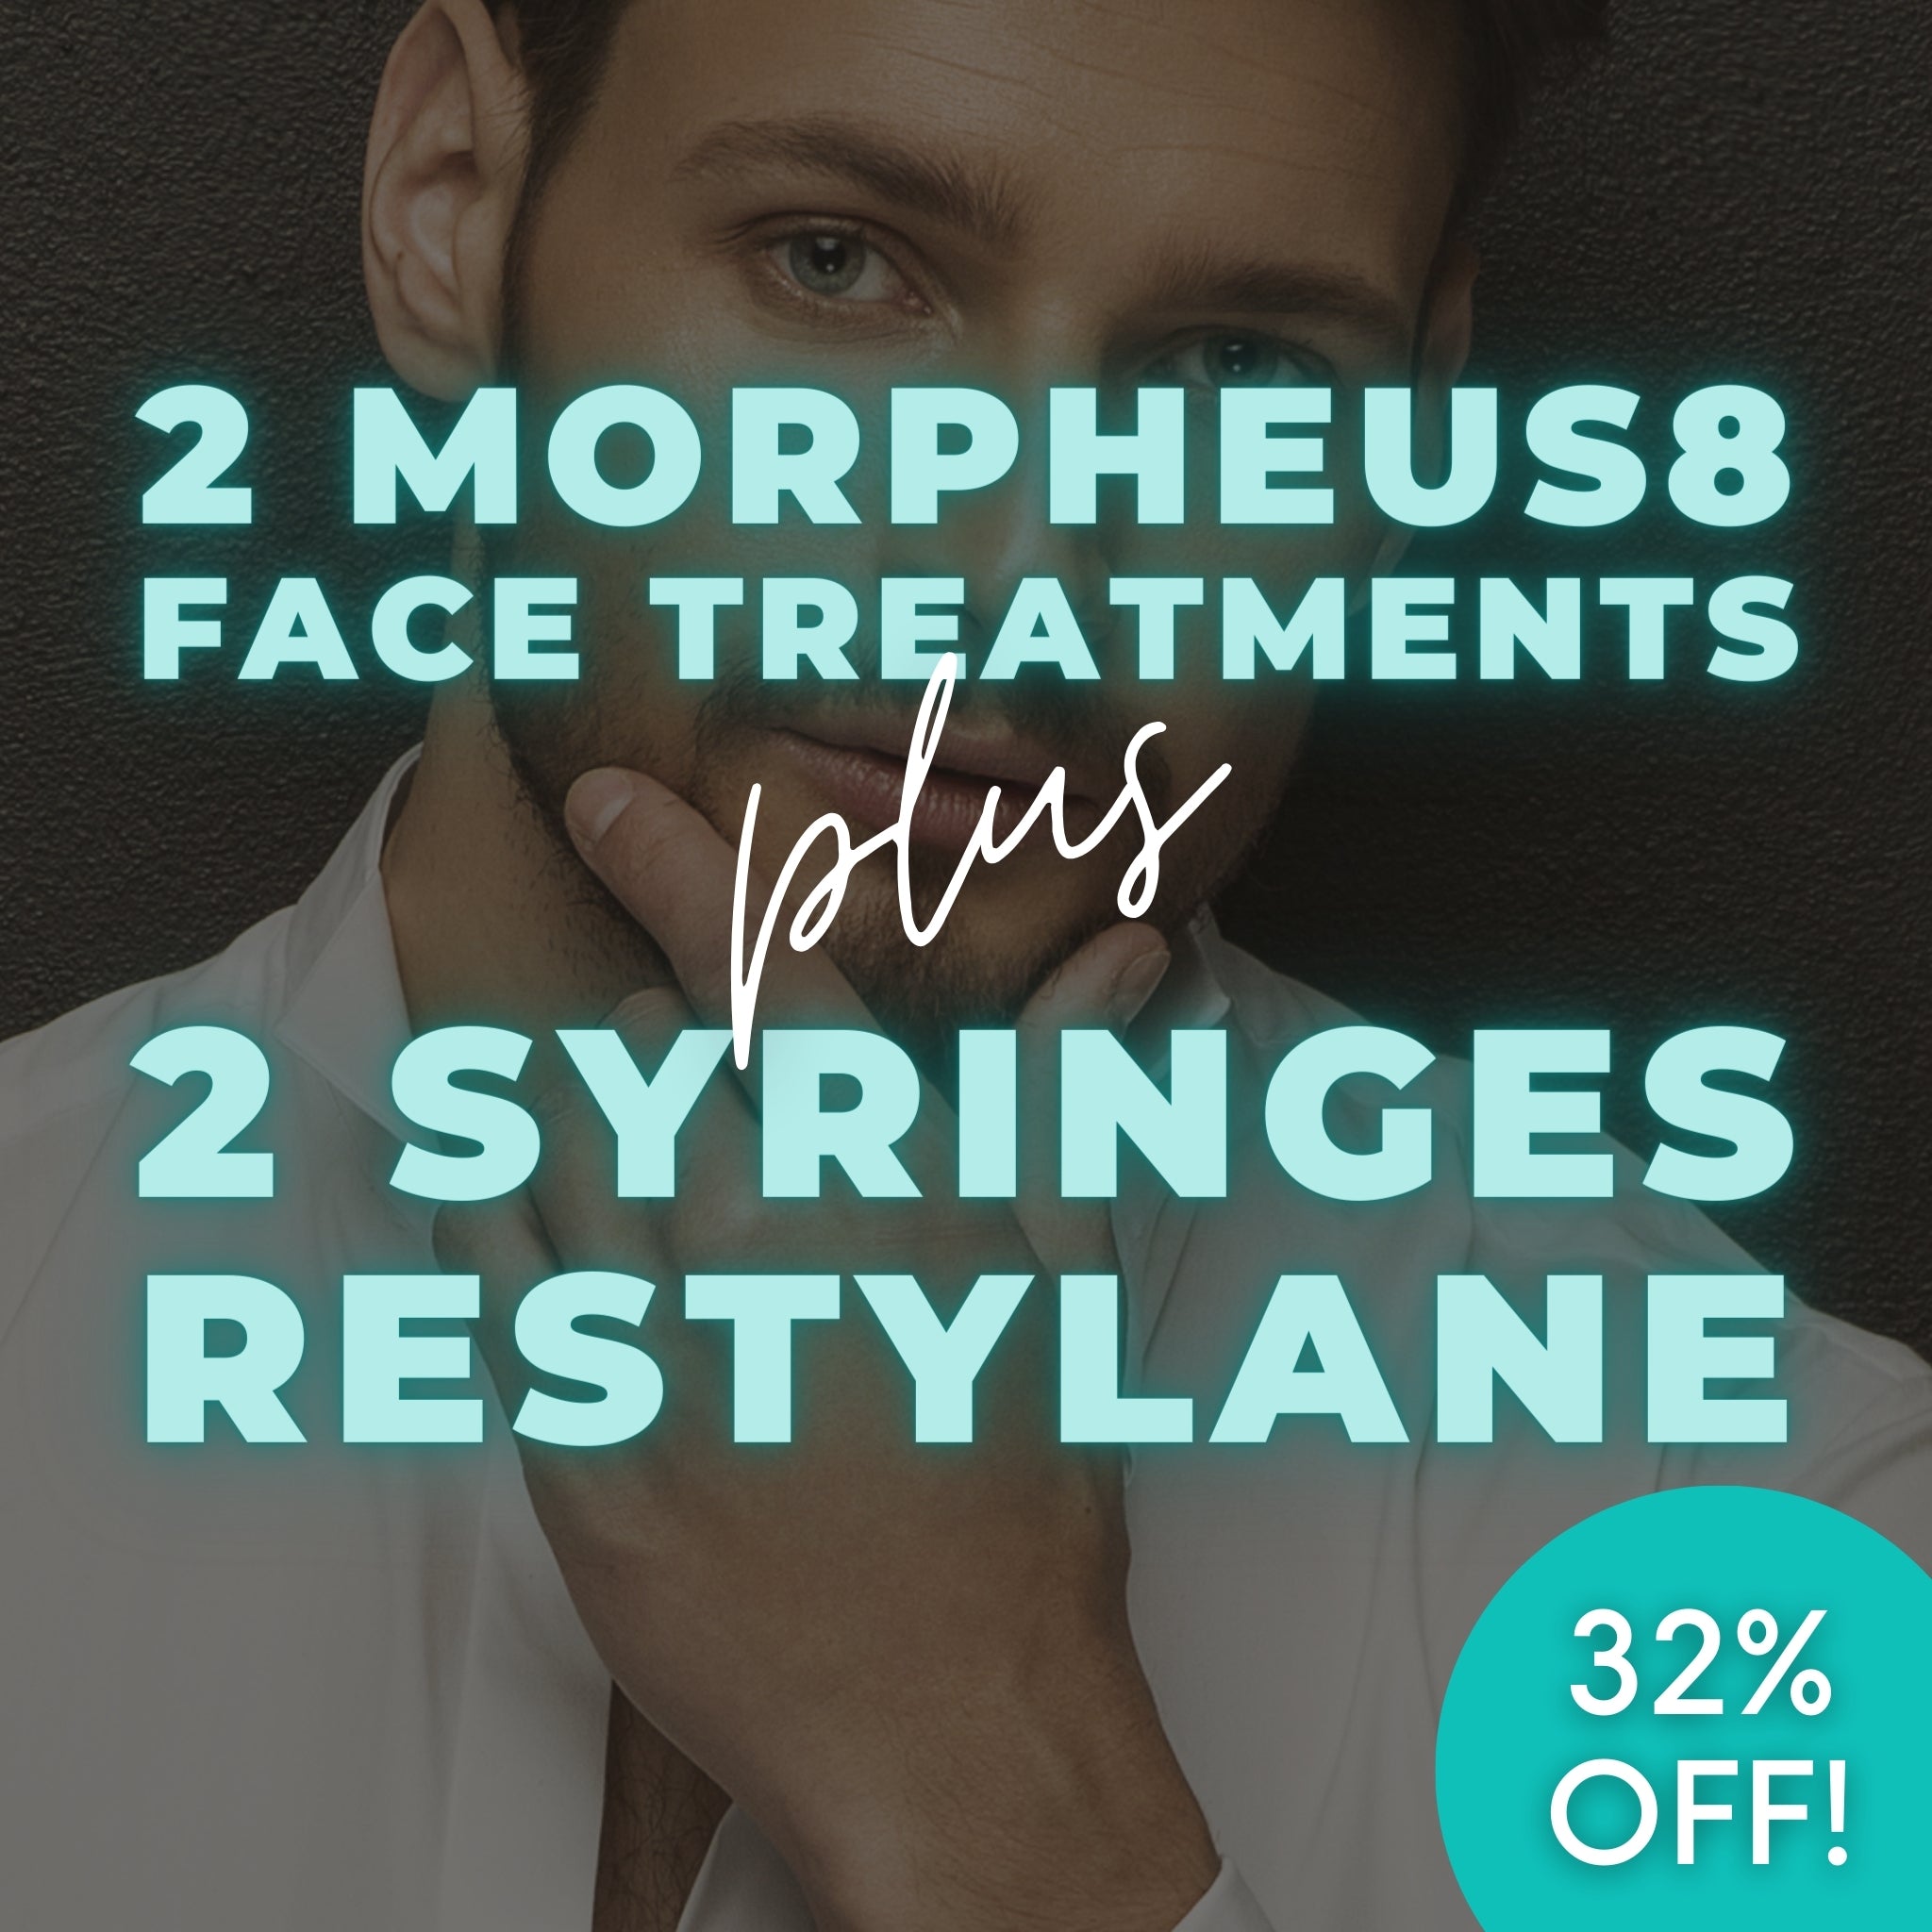 Morpheus8 Face Resurfacing 2-Pack + 2 FREE Syringes Restylane Filler